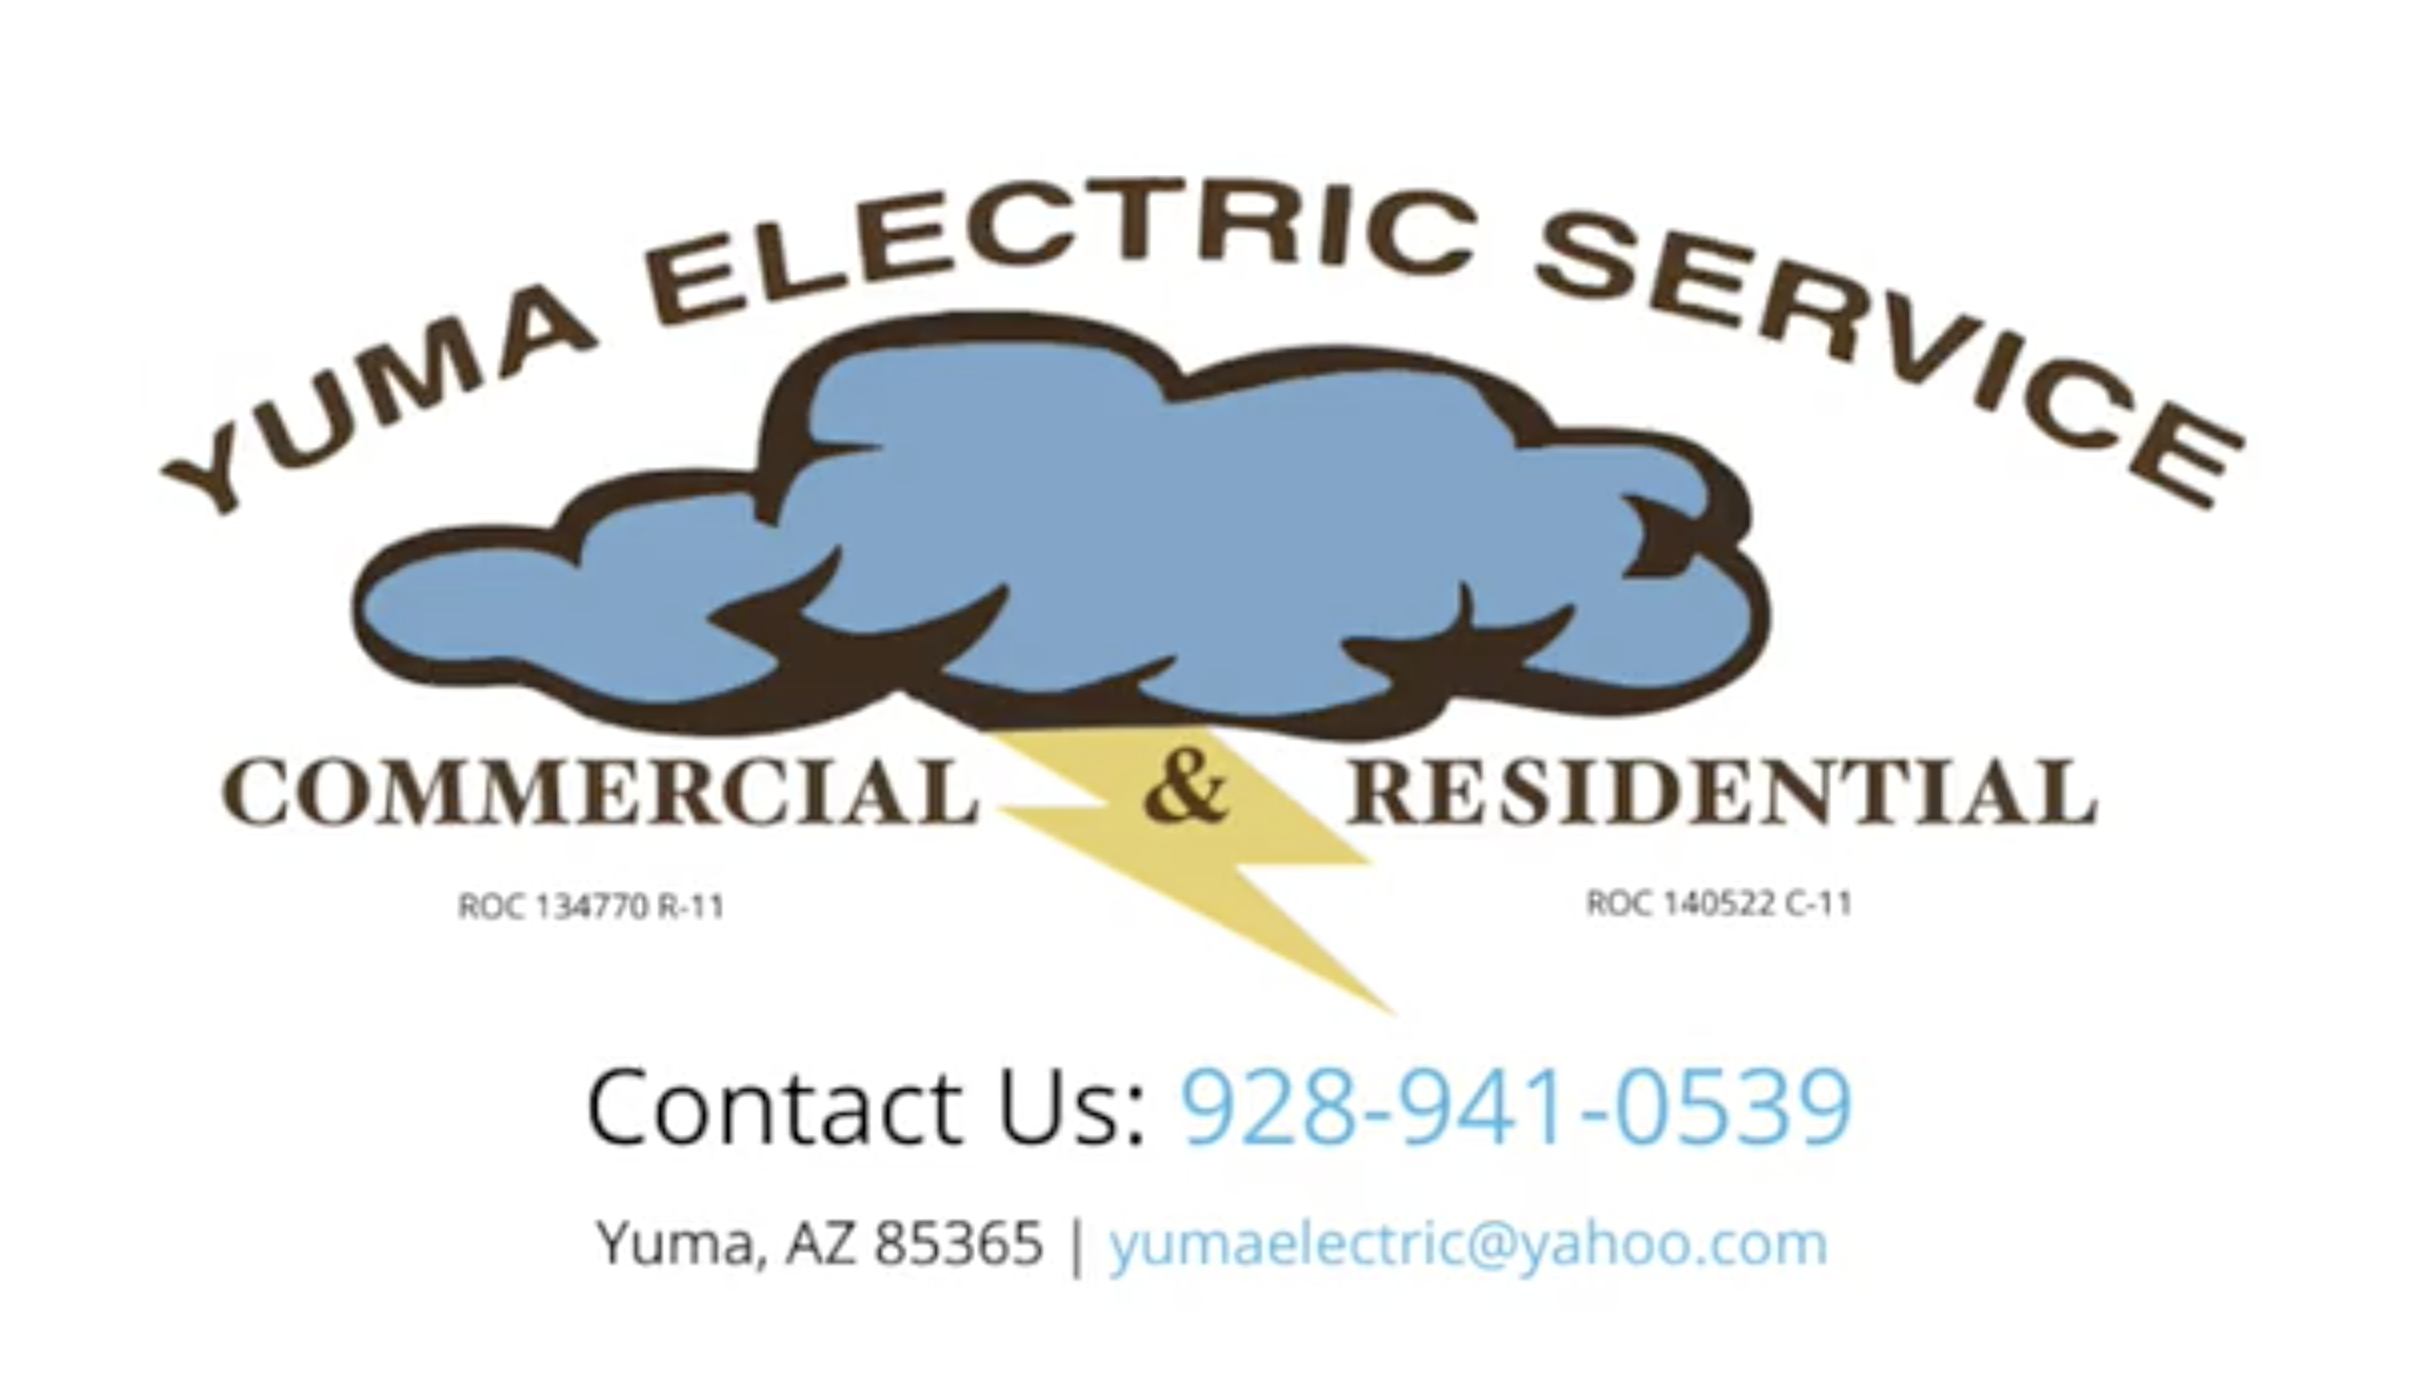 Yuma Electric Service